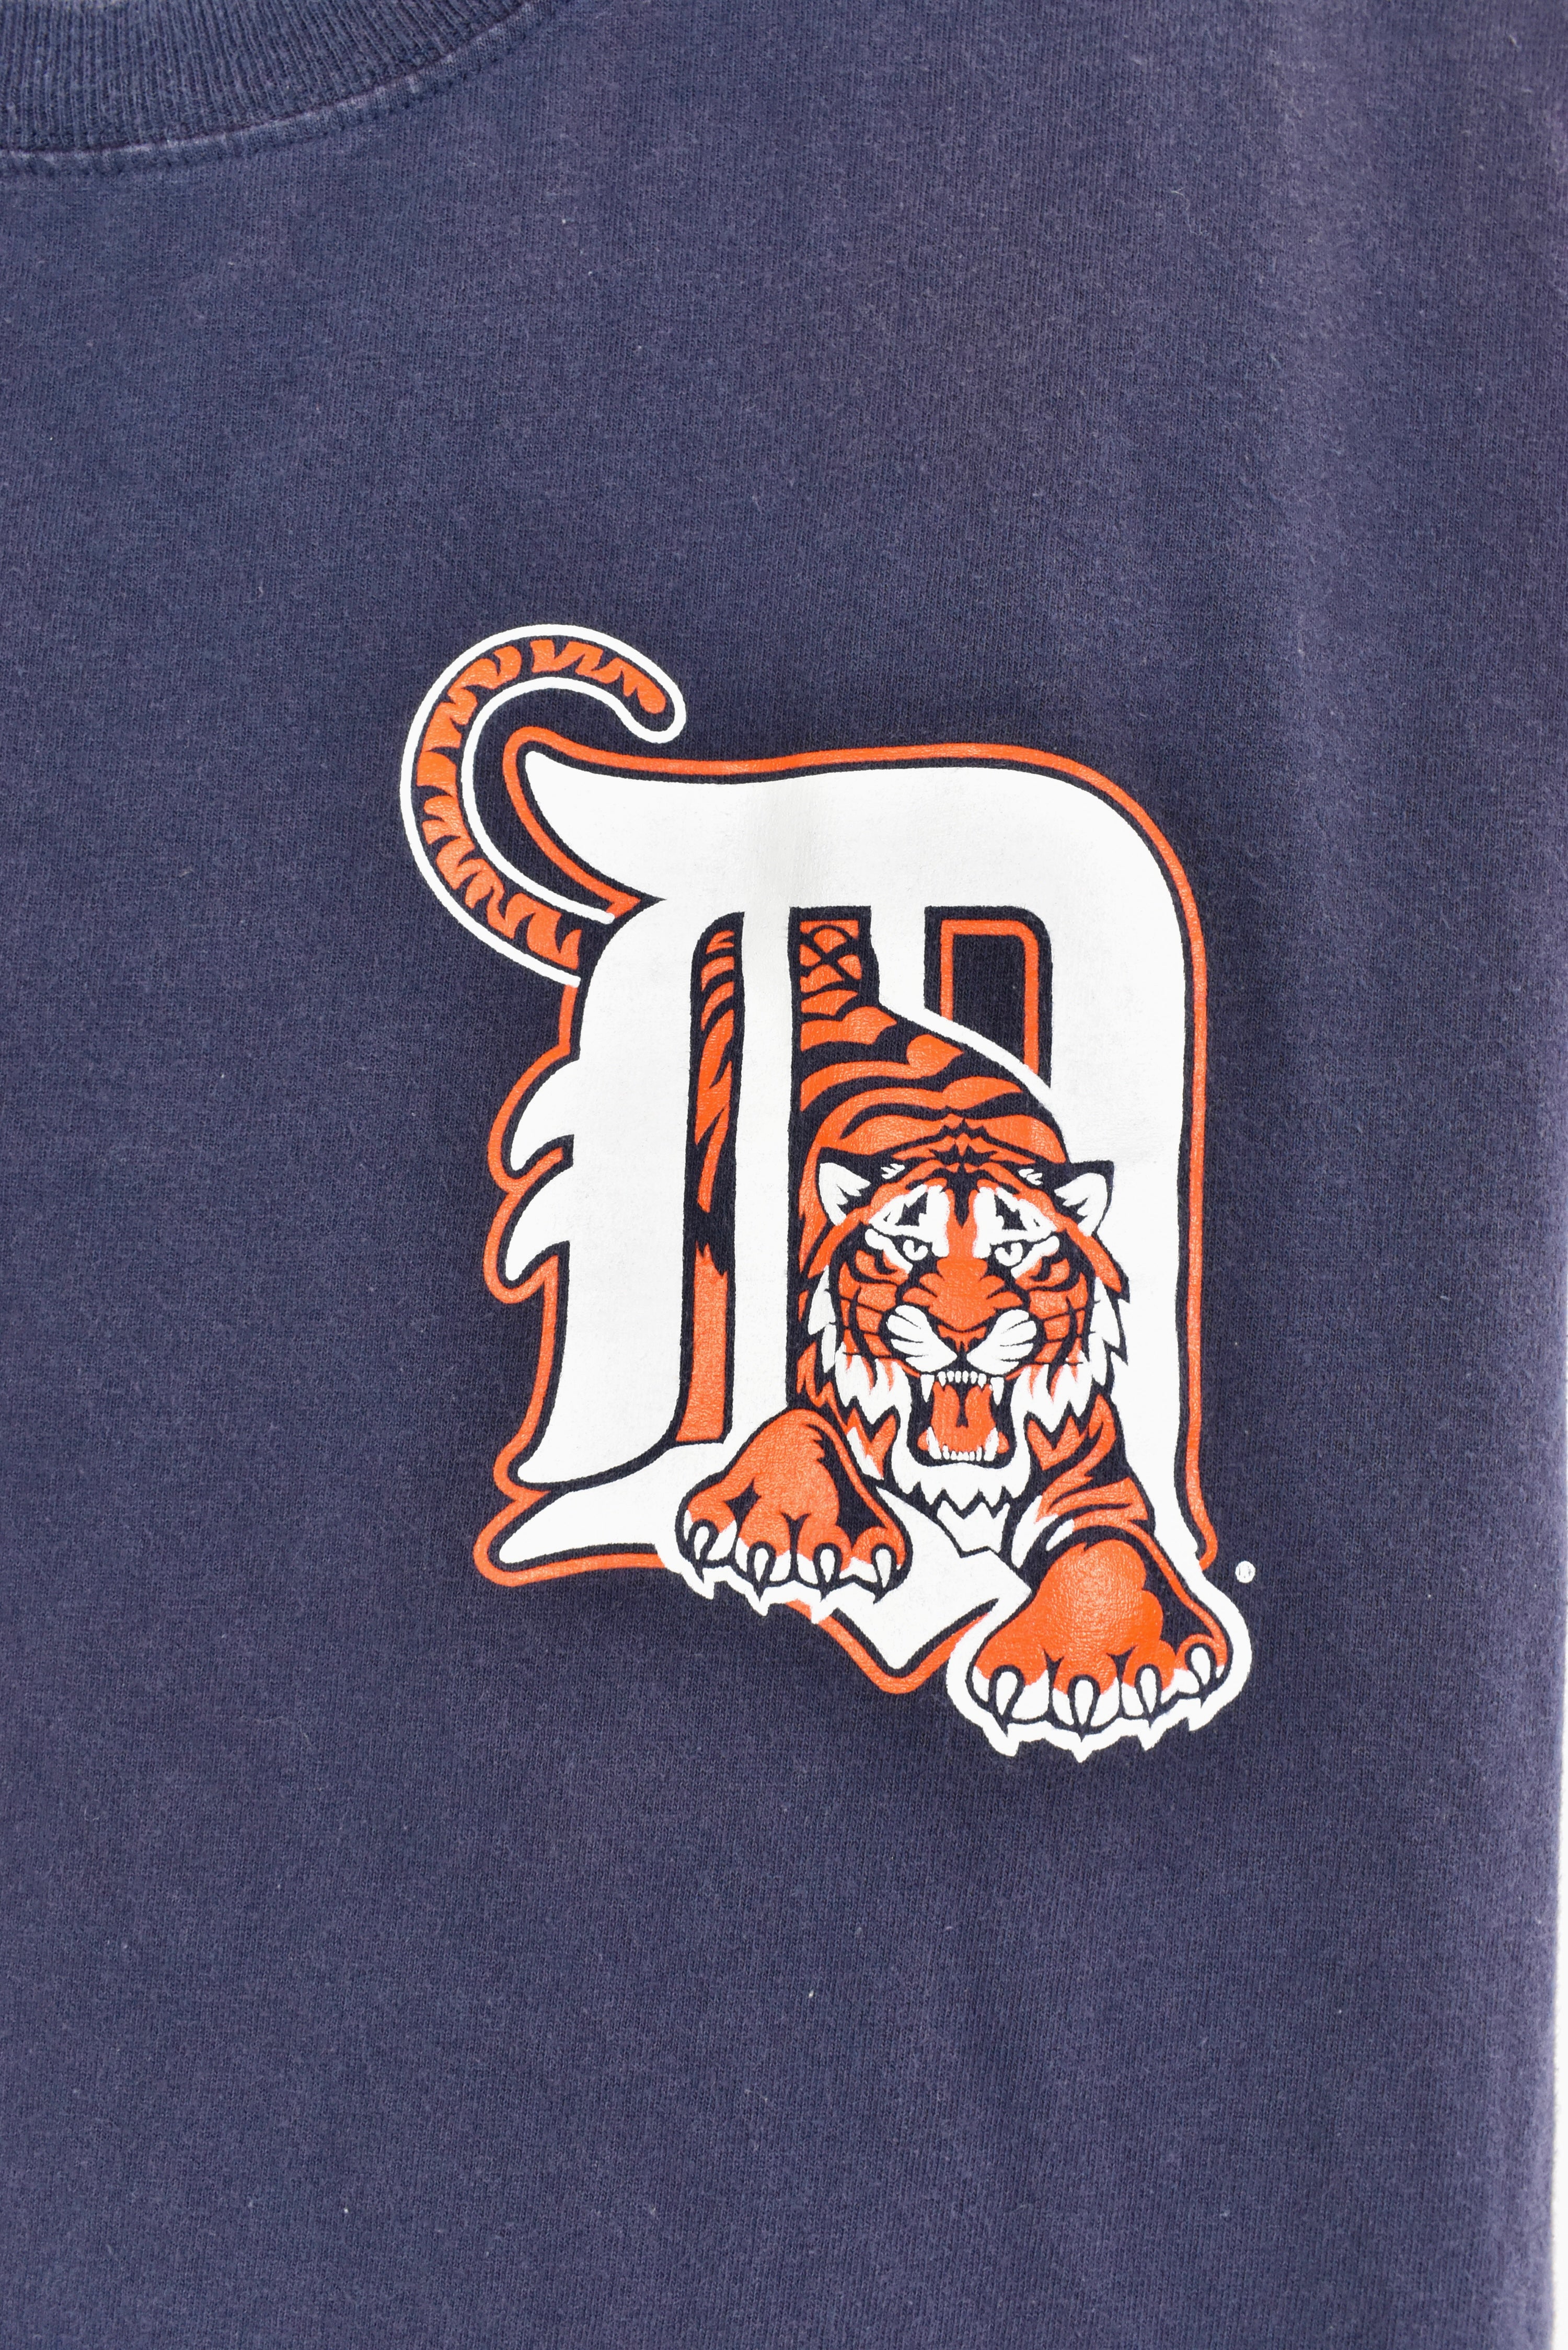 Vintage Detroit Tigers shirt, MLB short sleeve graphic tee